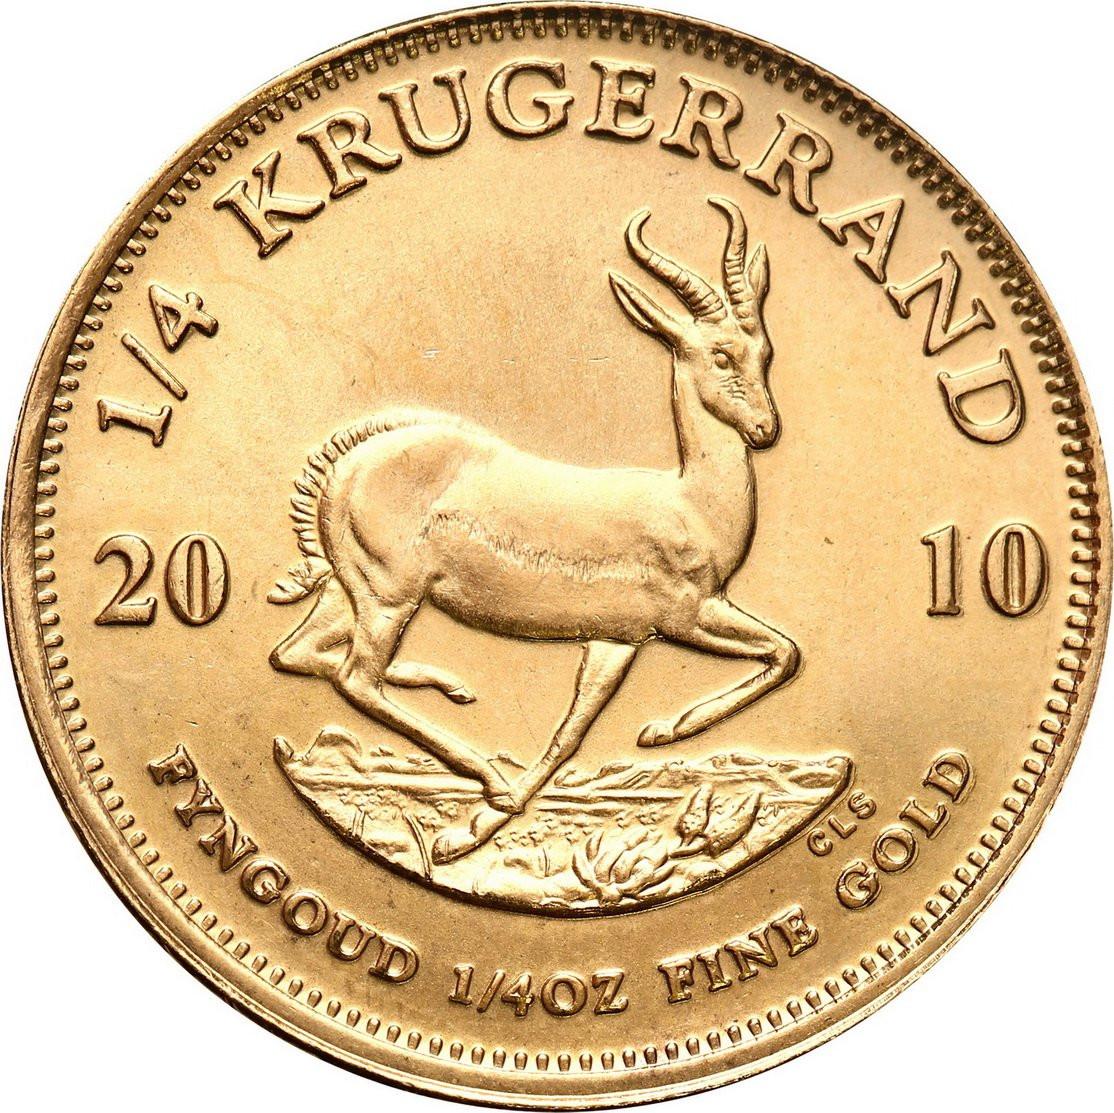 RPA.  1/4 Krugerranda 2010 - 1/4 uncji złota